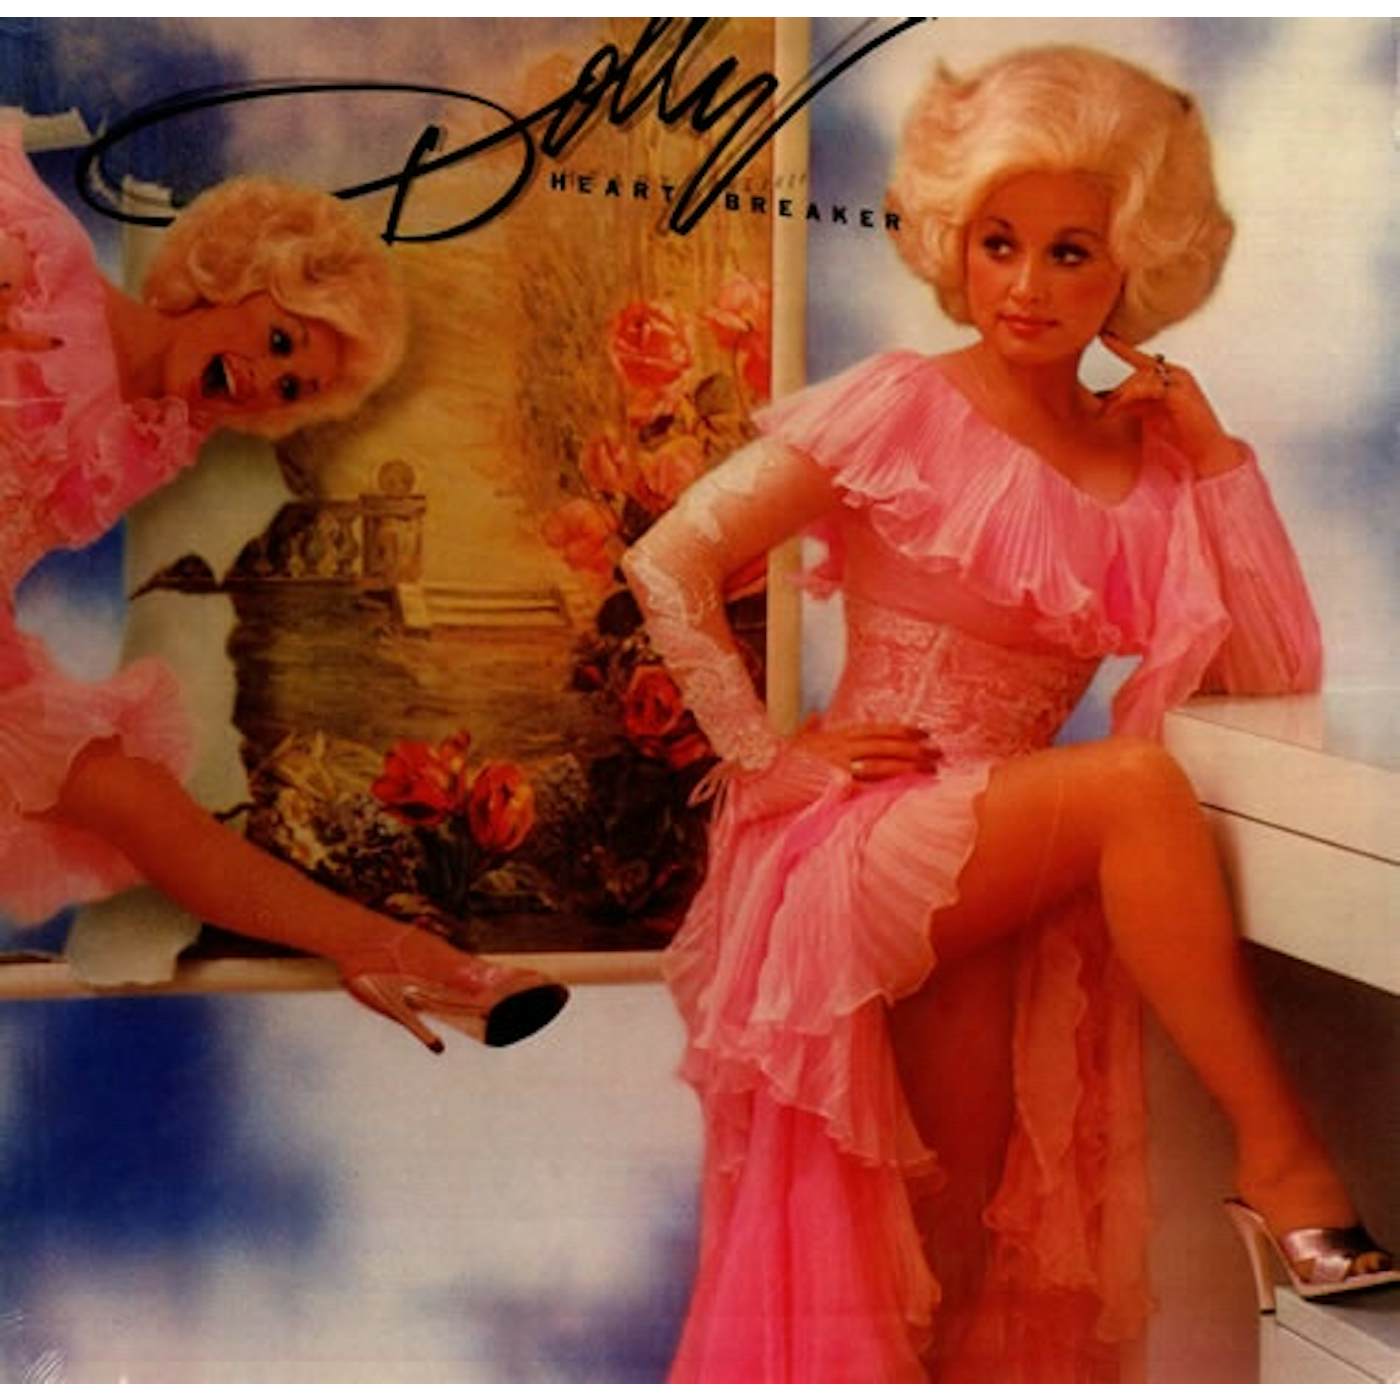 Dolly Parton HEARTBREAKER CD